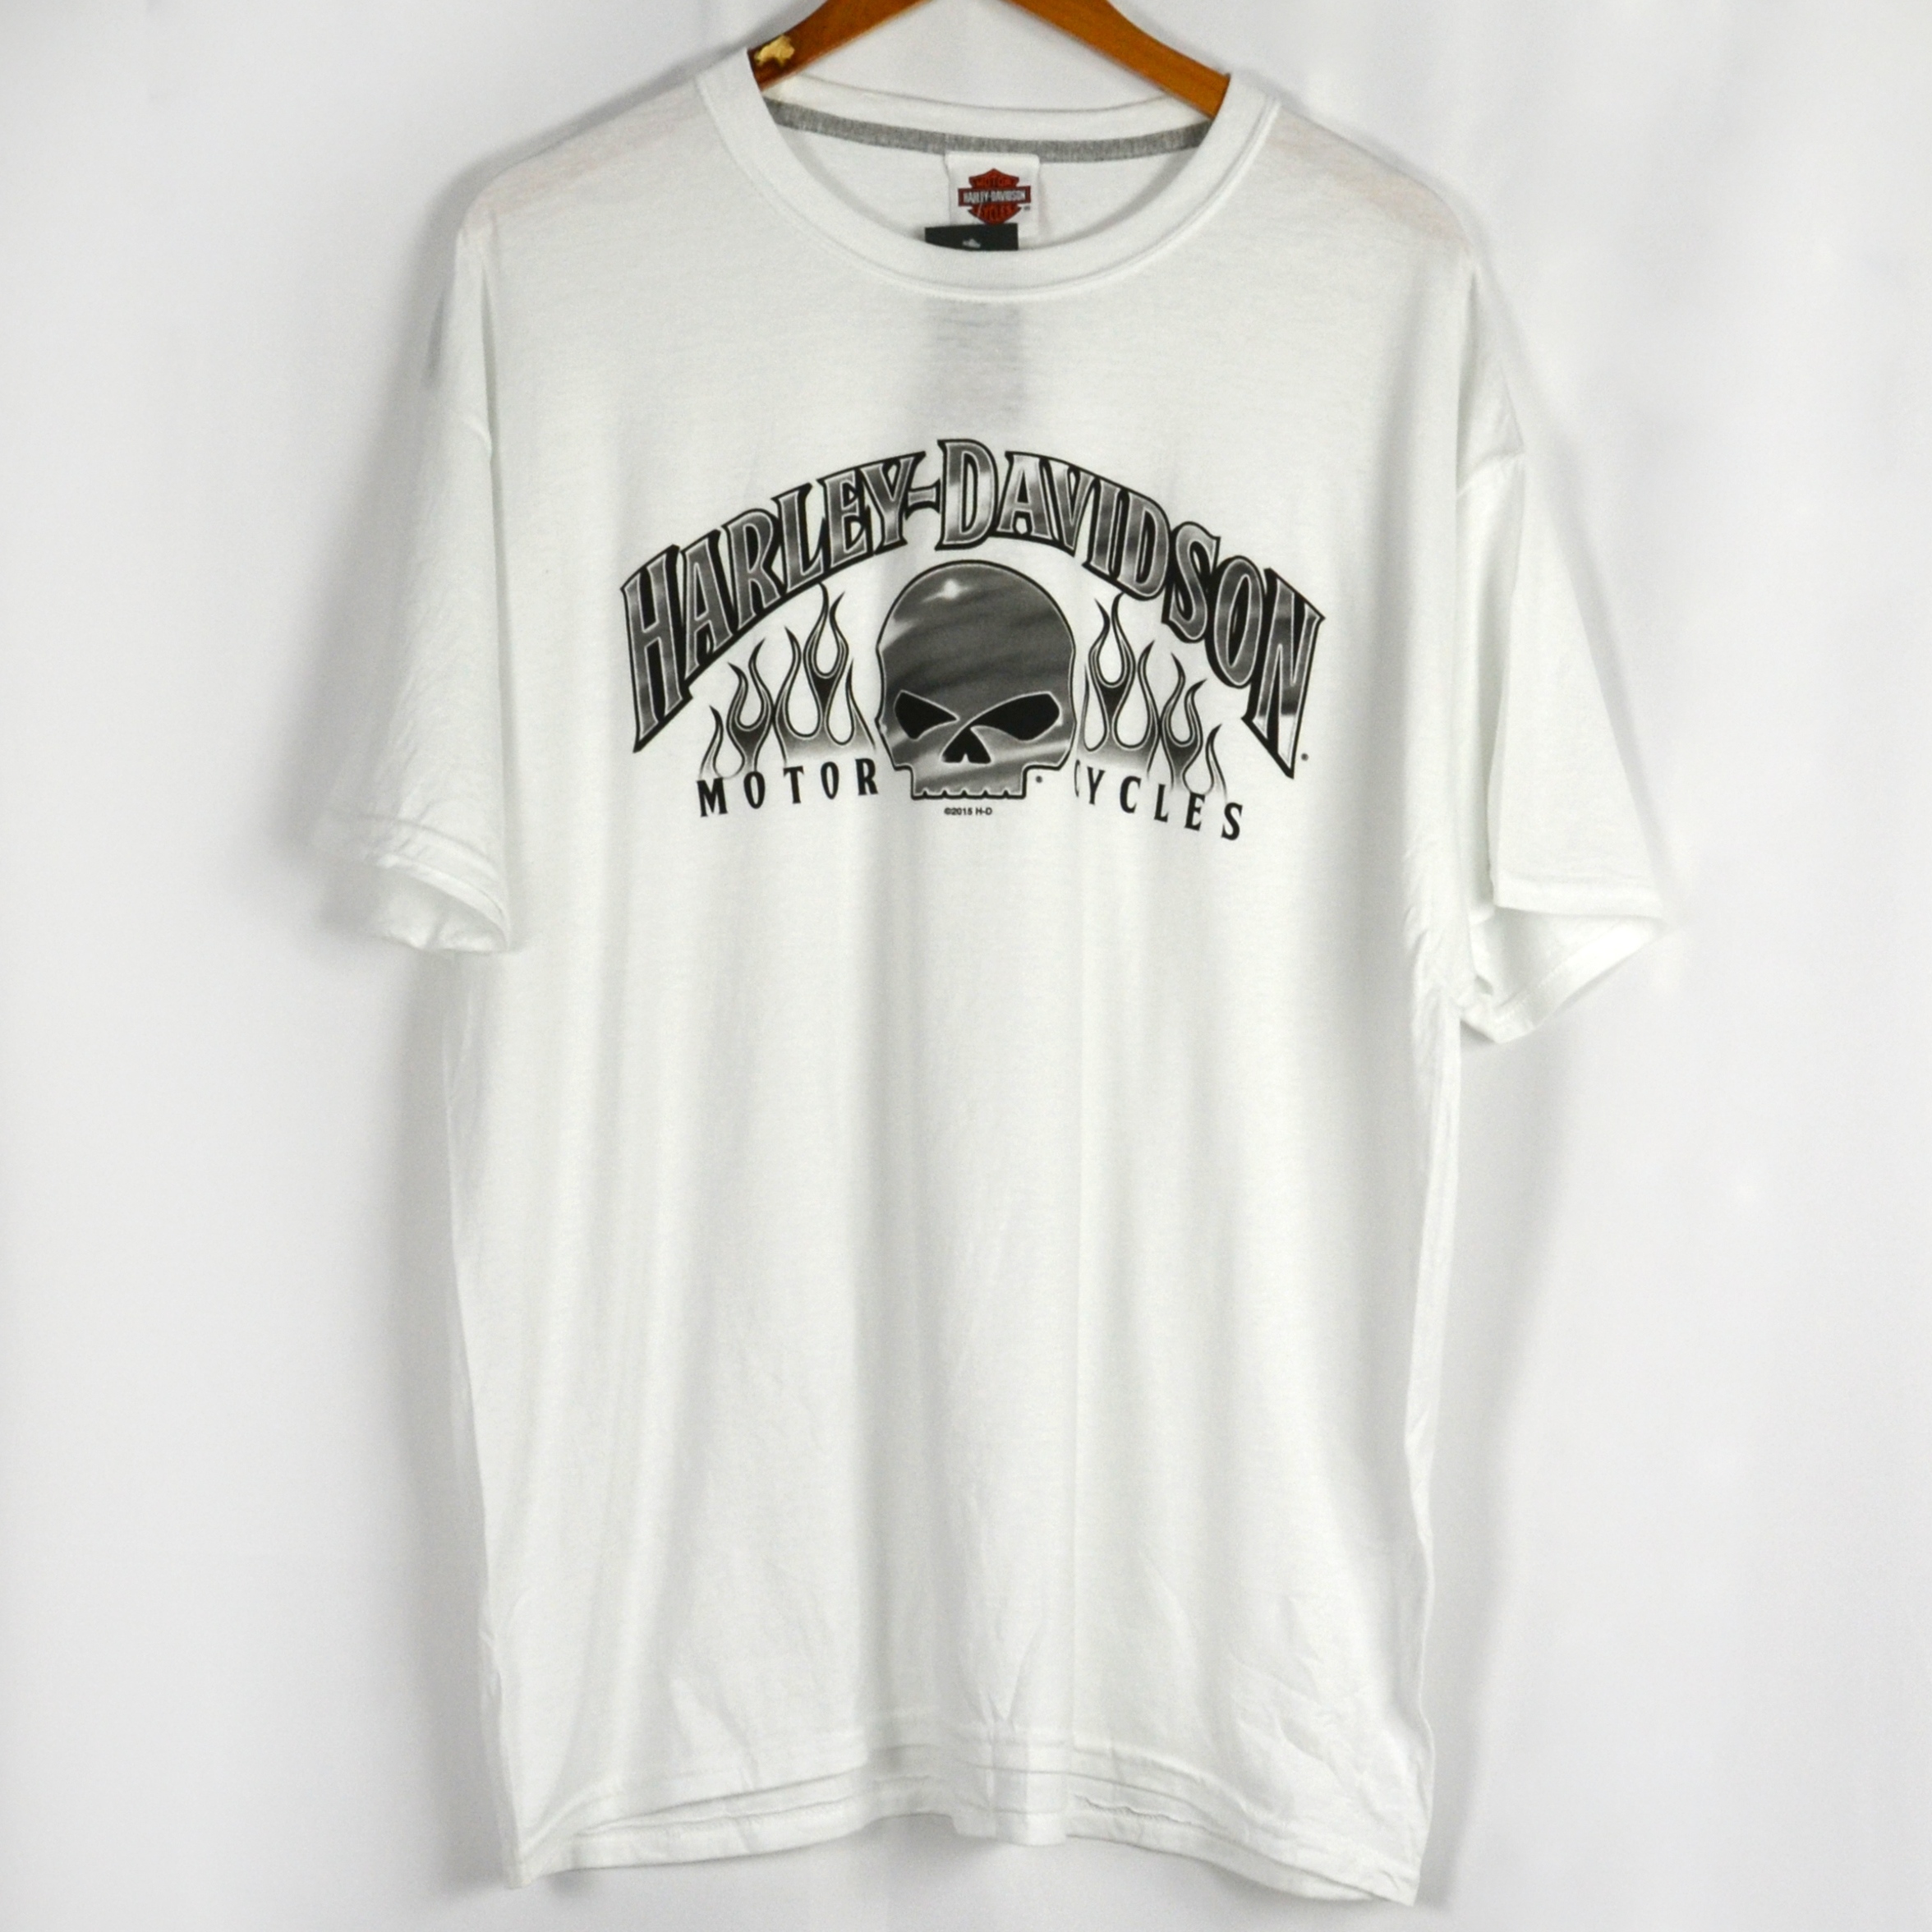 Camiseta / Tee shirt / Harley Davidson - Magpie Vintage